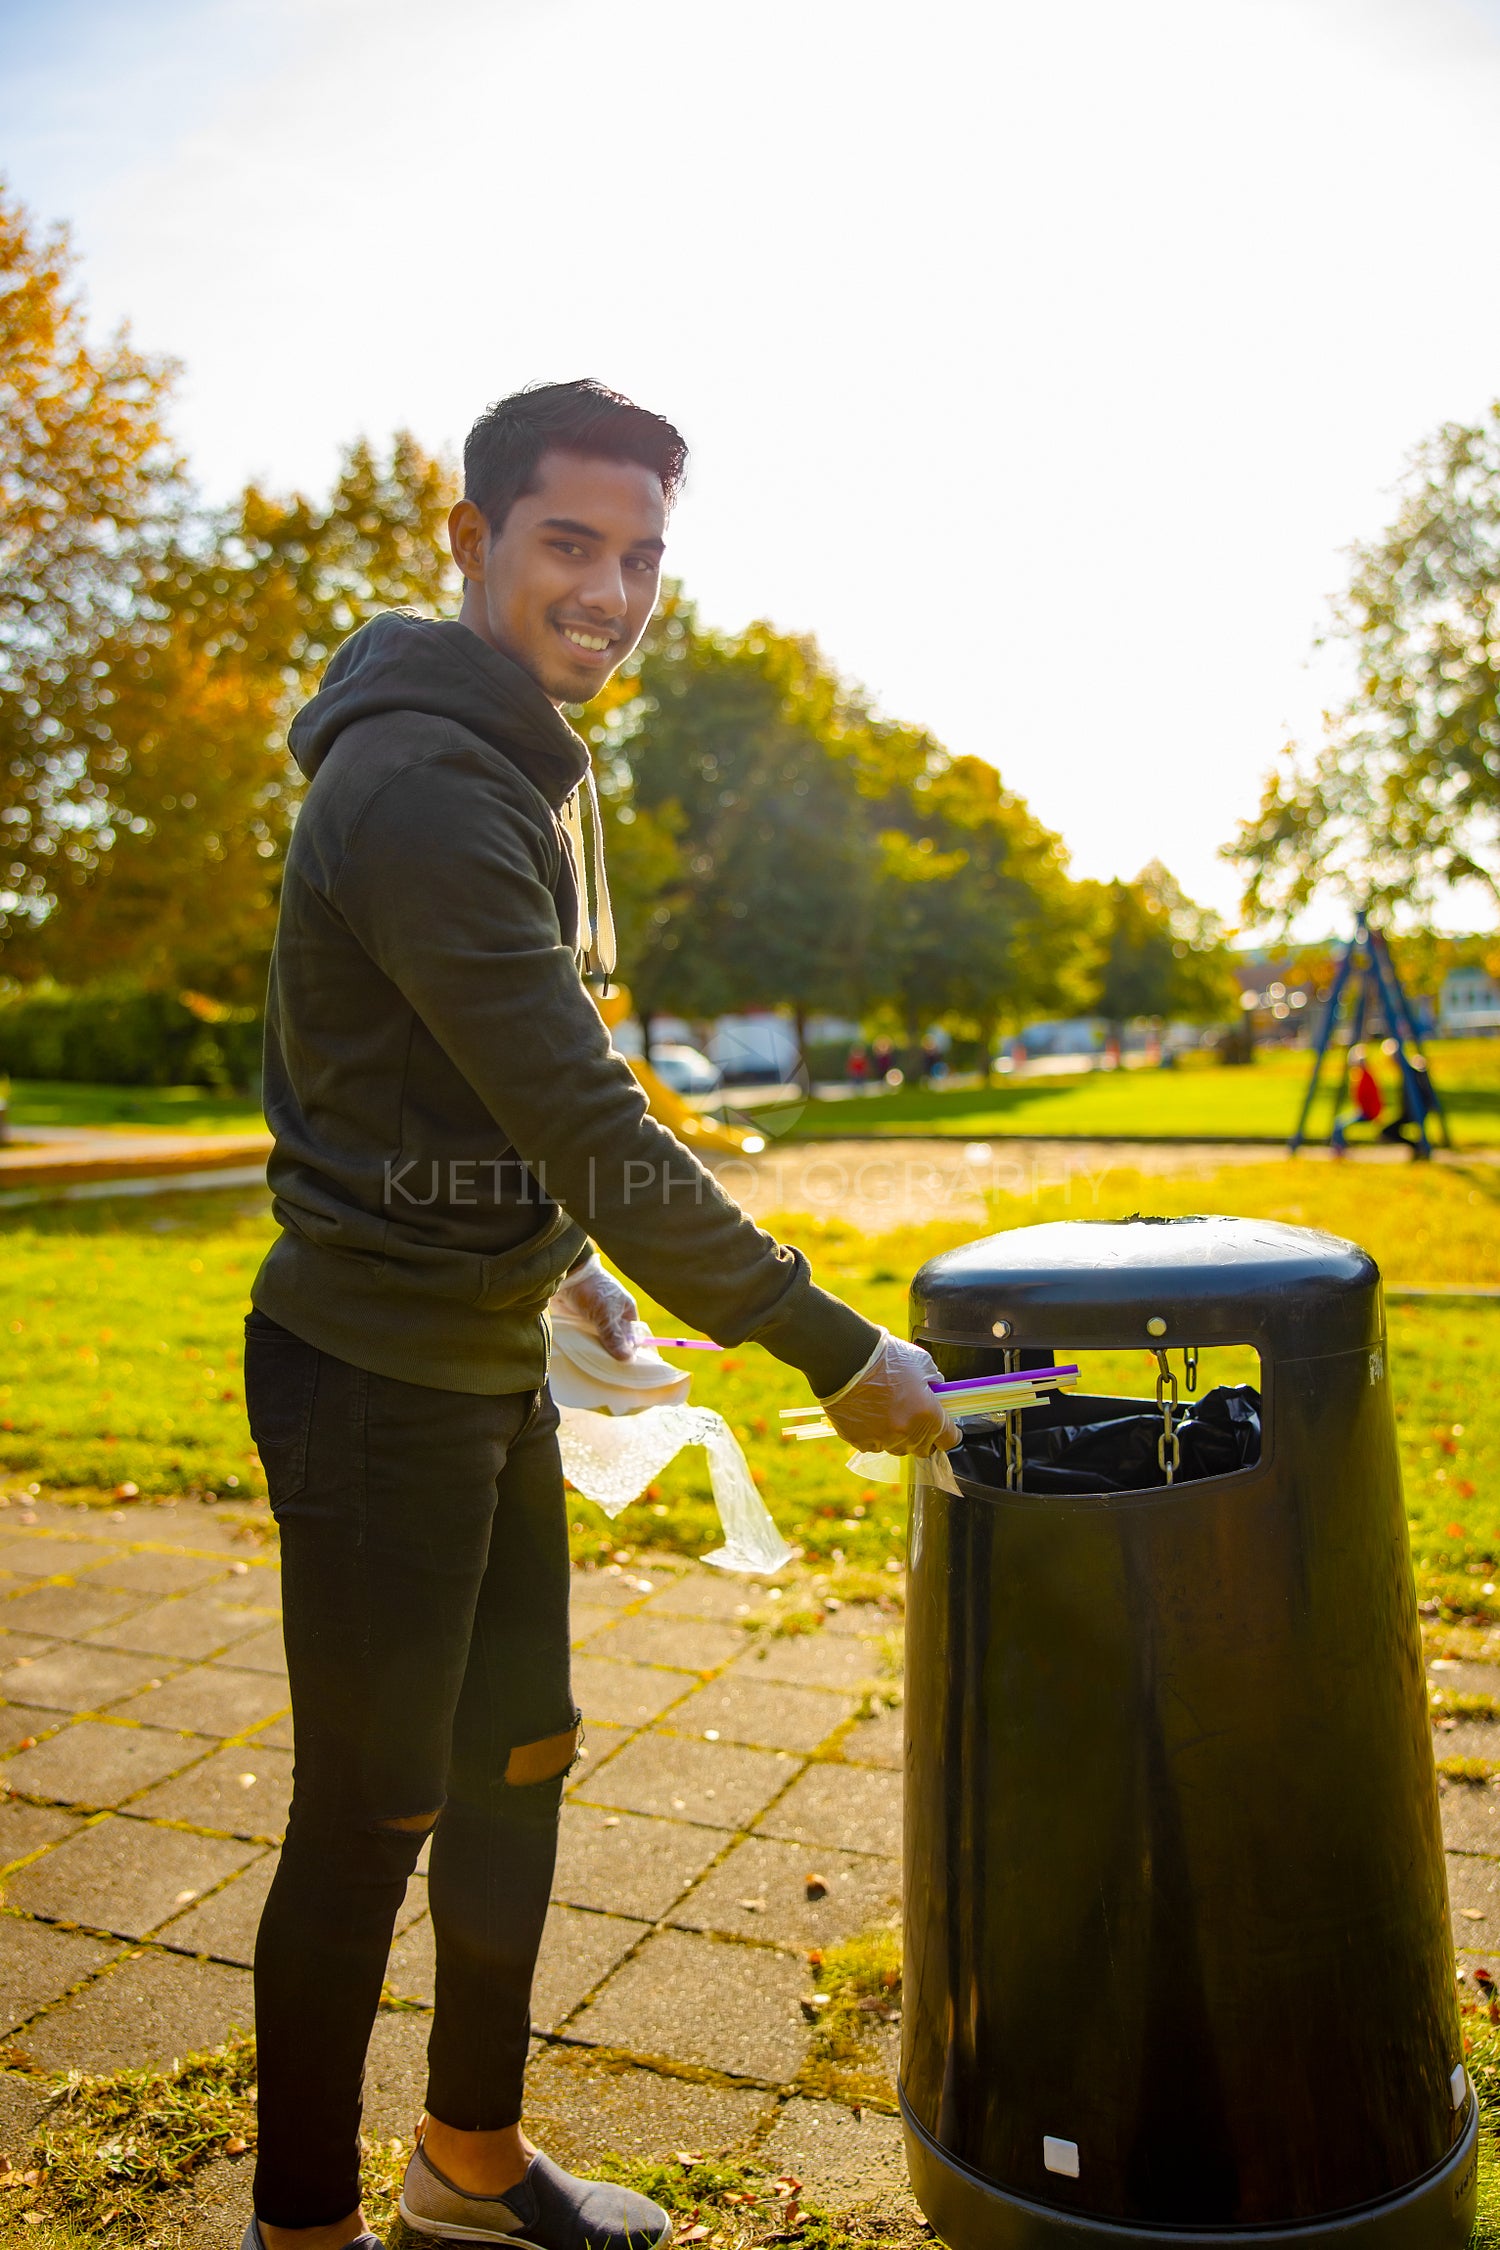 Smiling young volunteer putting straws in garbage bin at park